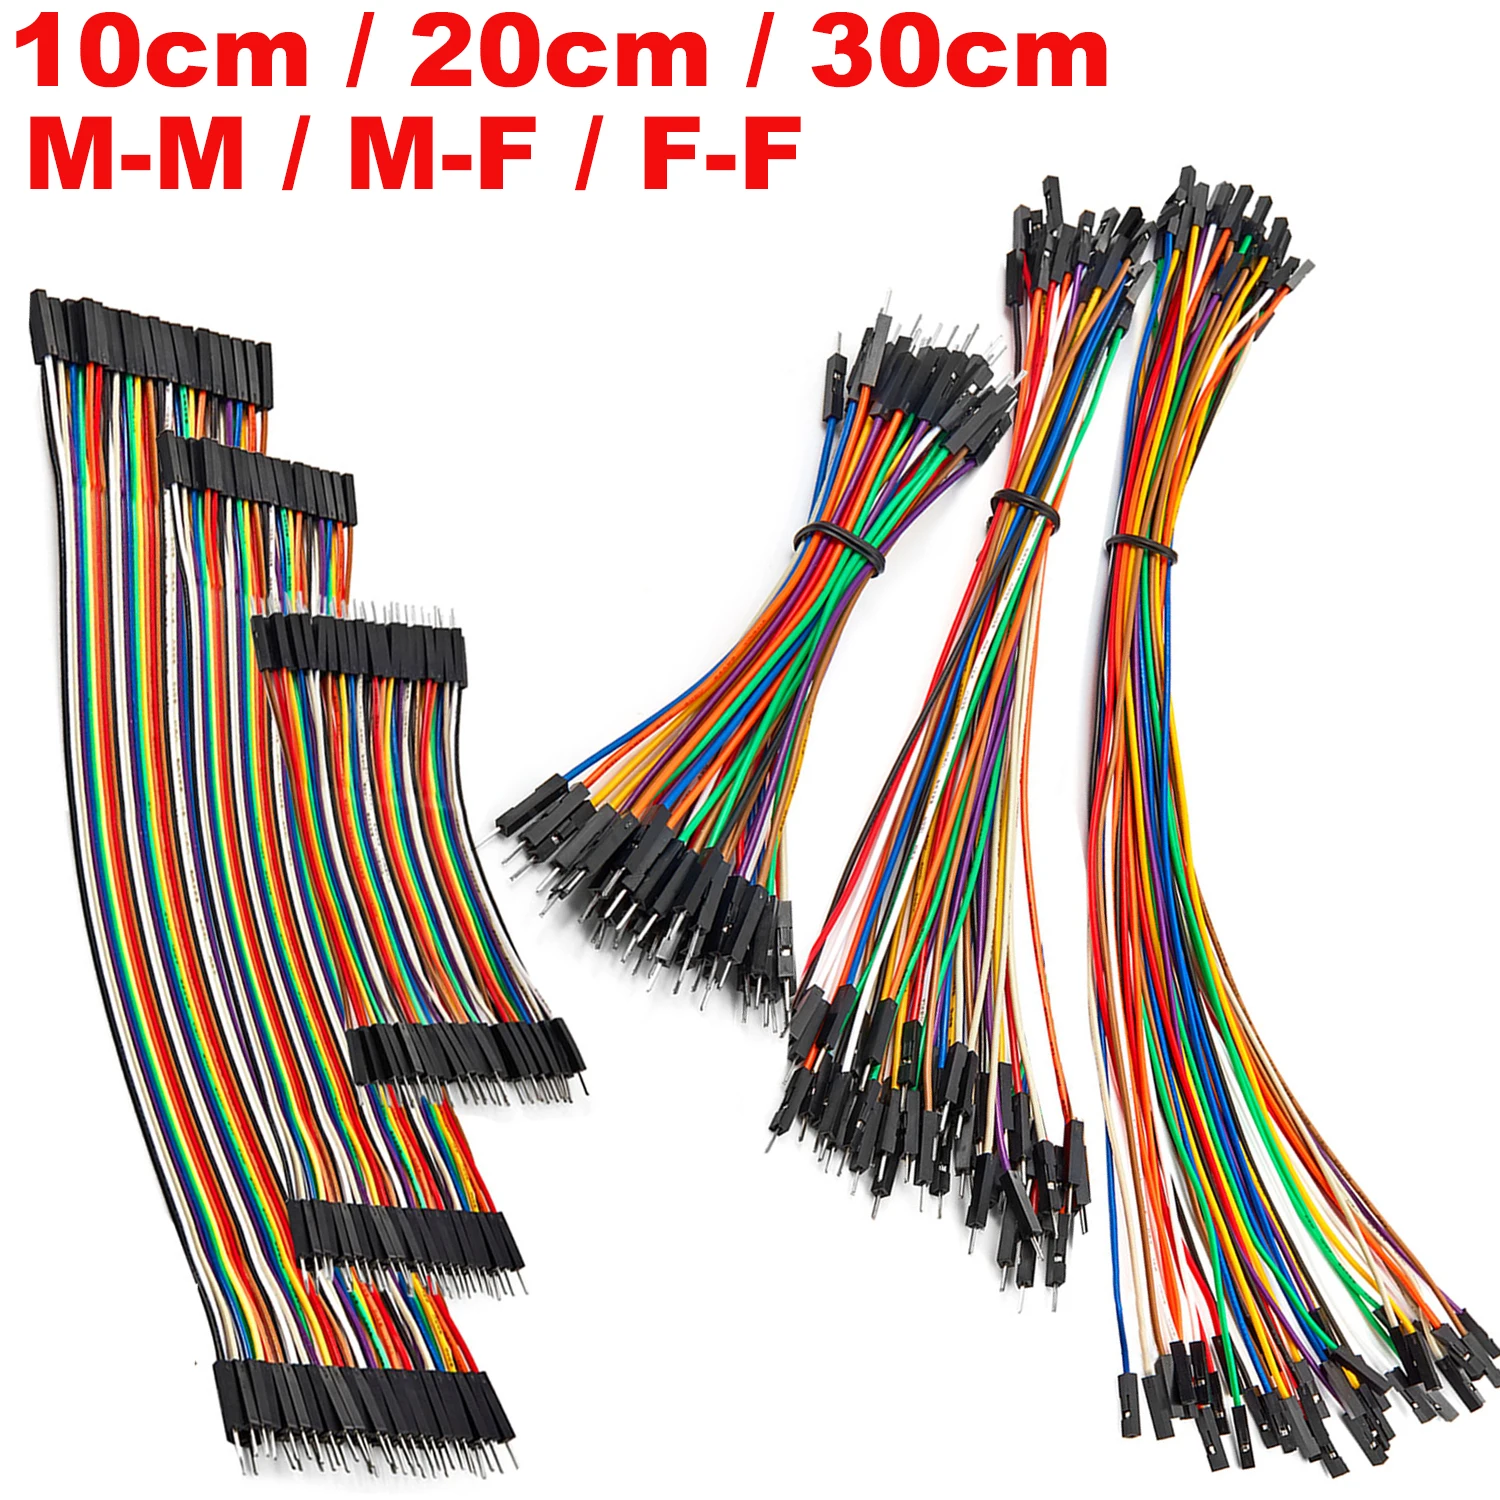 Купи 10cm 20cm 30cm 24AWG Dupont Cable Ribbon Jumper Wire Connector Kit Male Female Copper Line Set for DIY Arduino Breadboard PCB за 83 рублей в магазине AliExpress